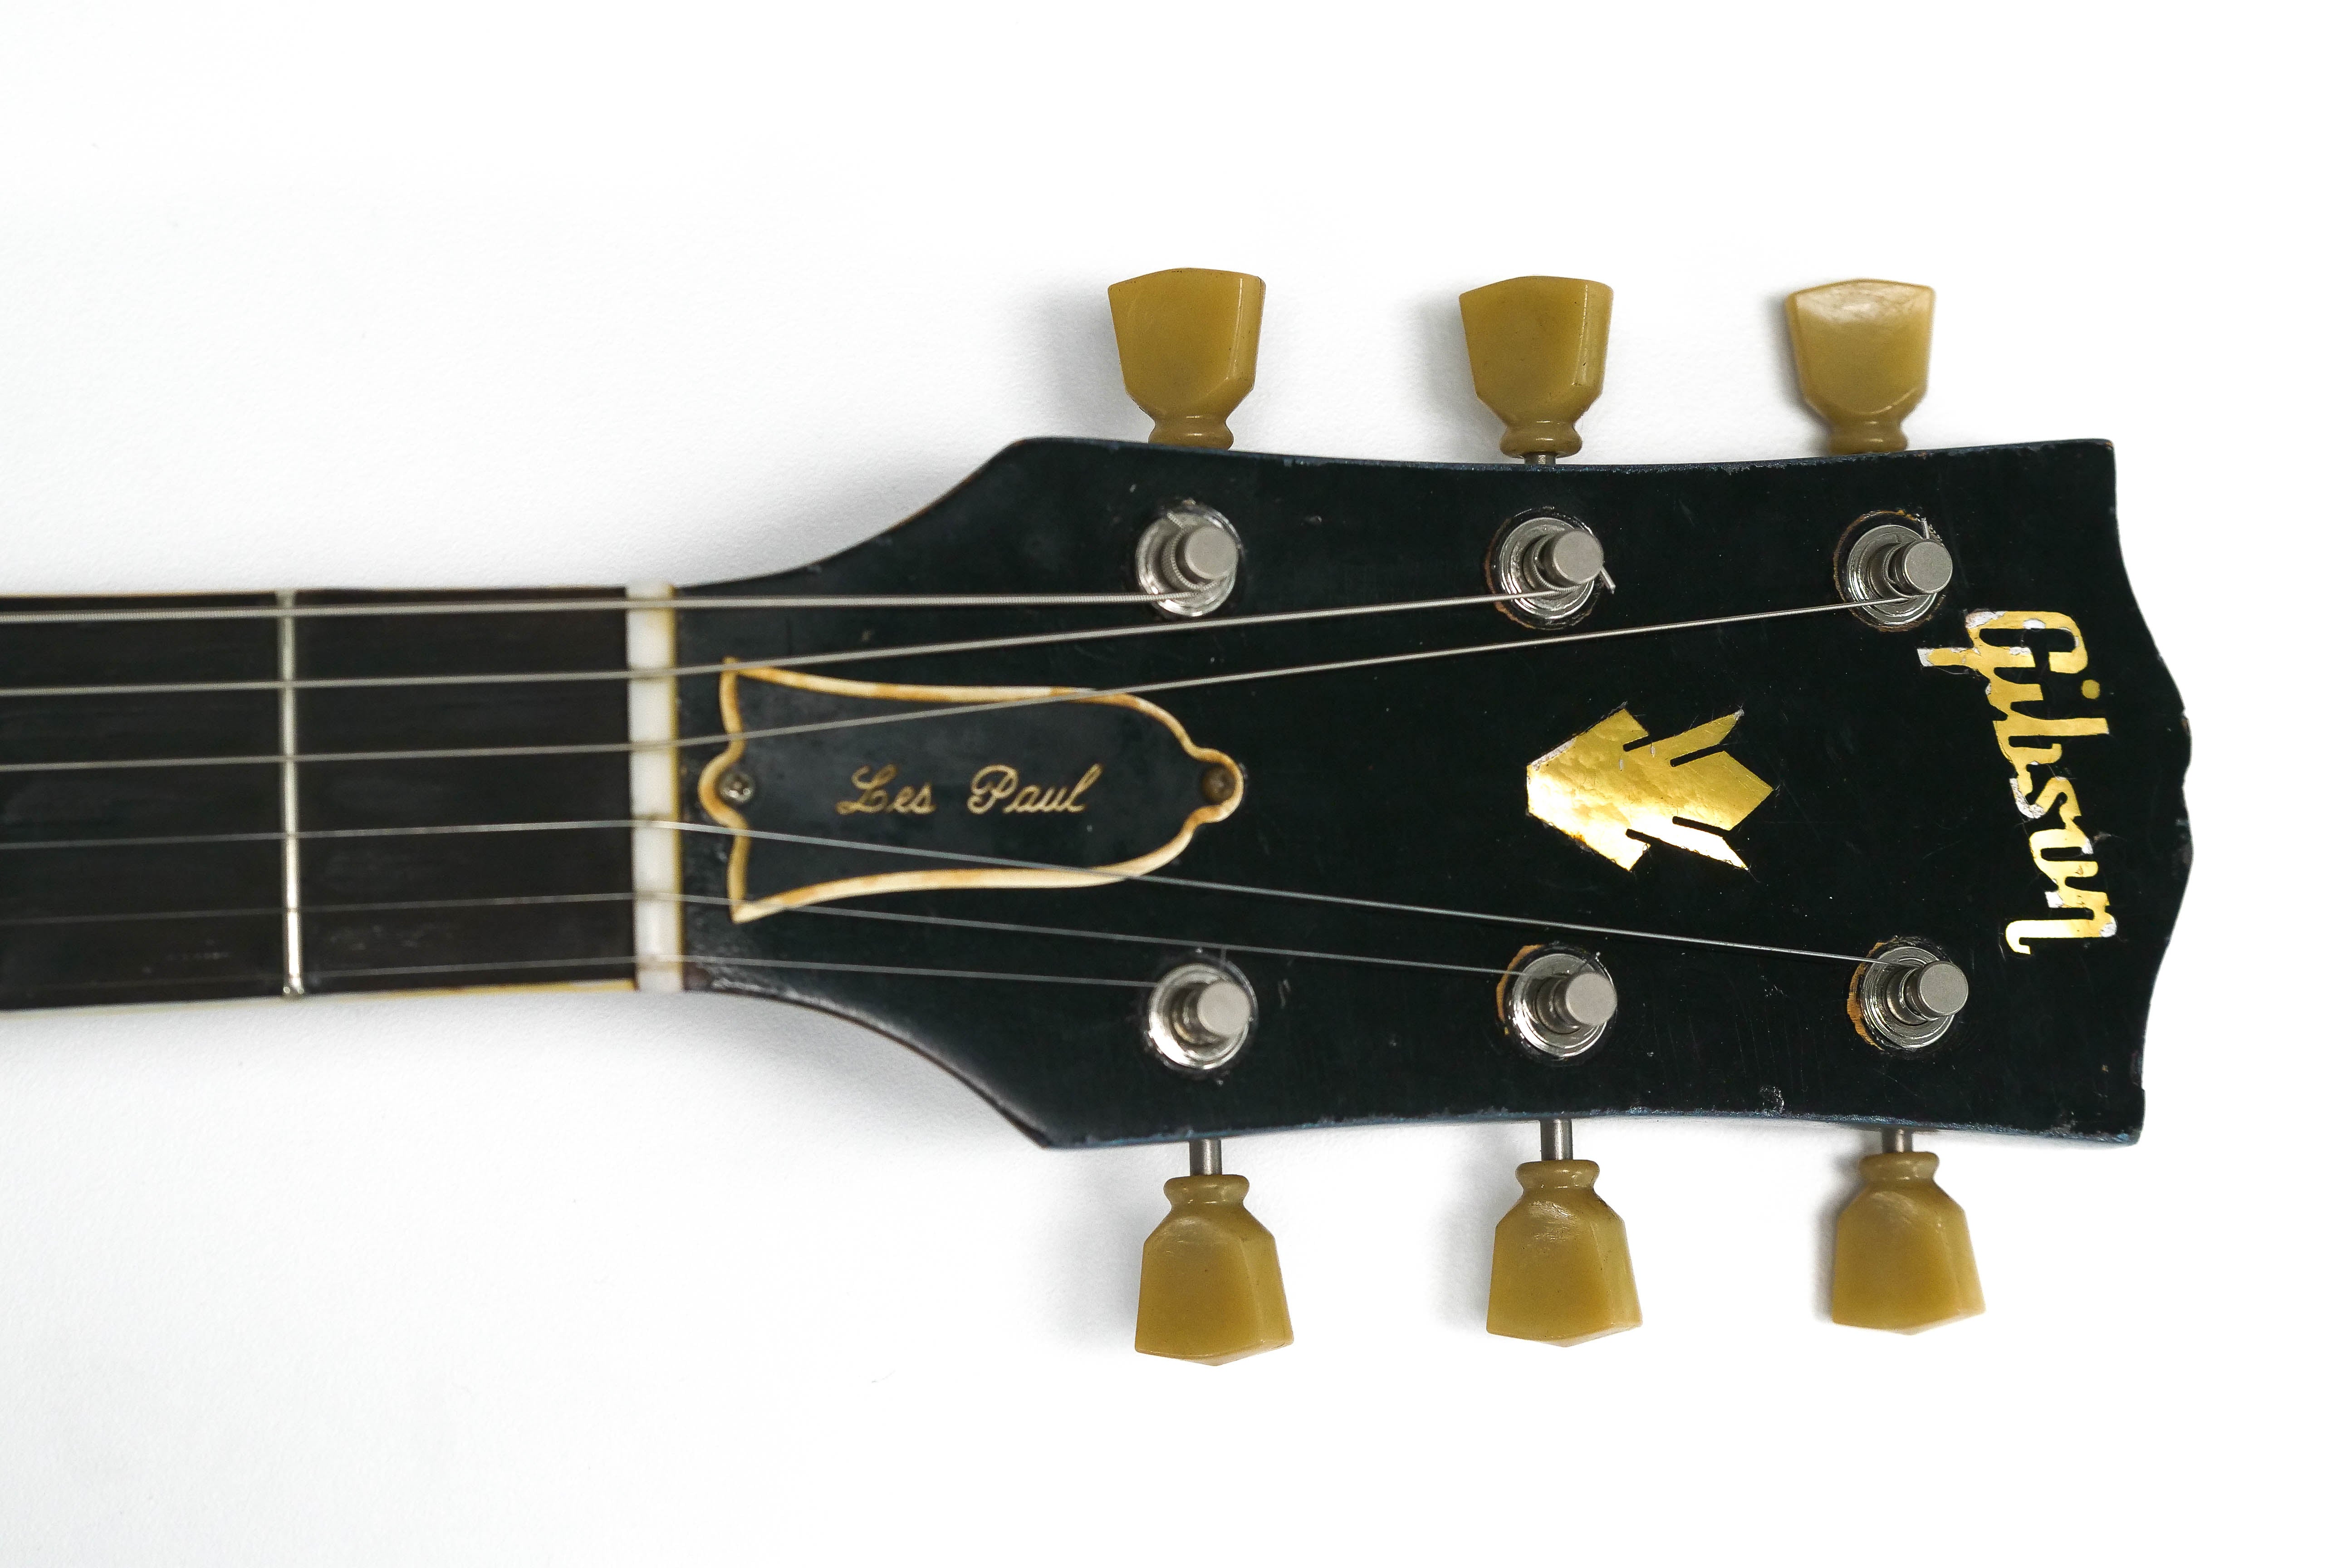 1961 Gibson Les Paul Solid Body Electric Guitar - Custom